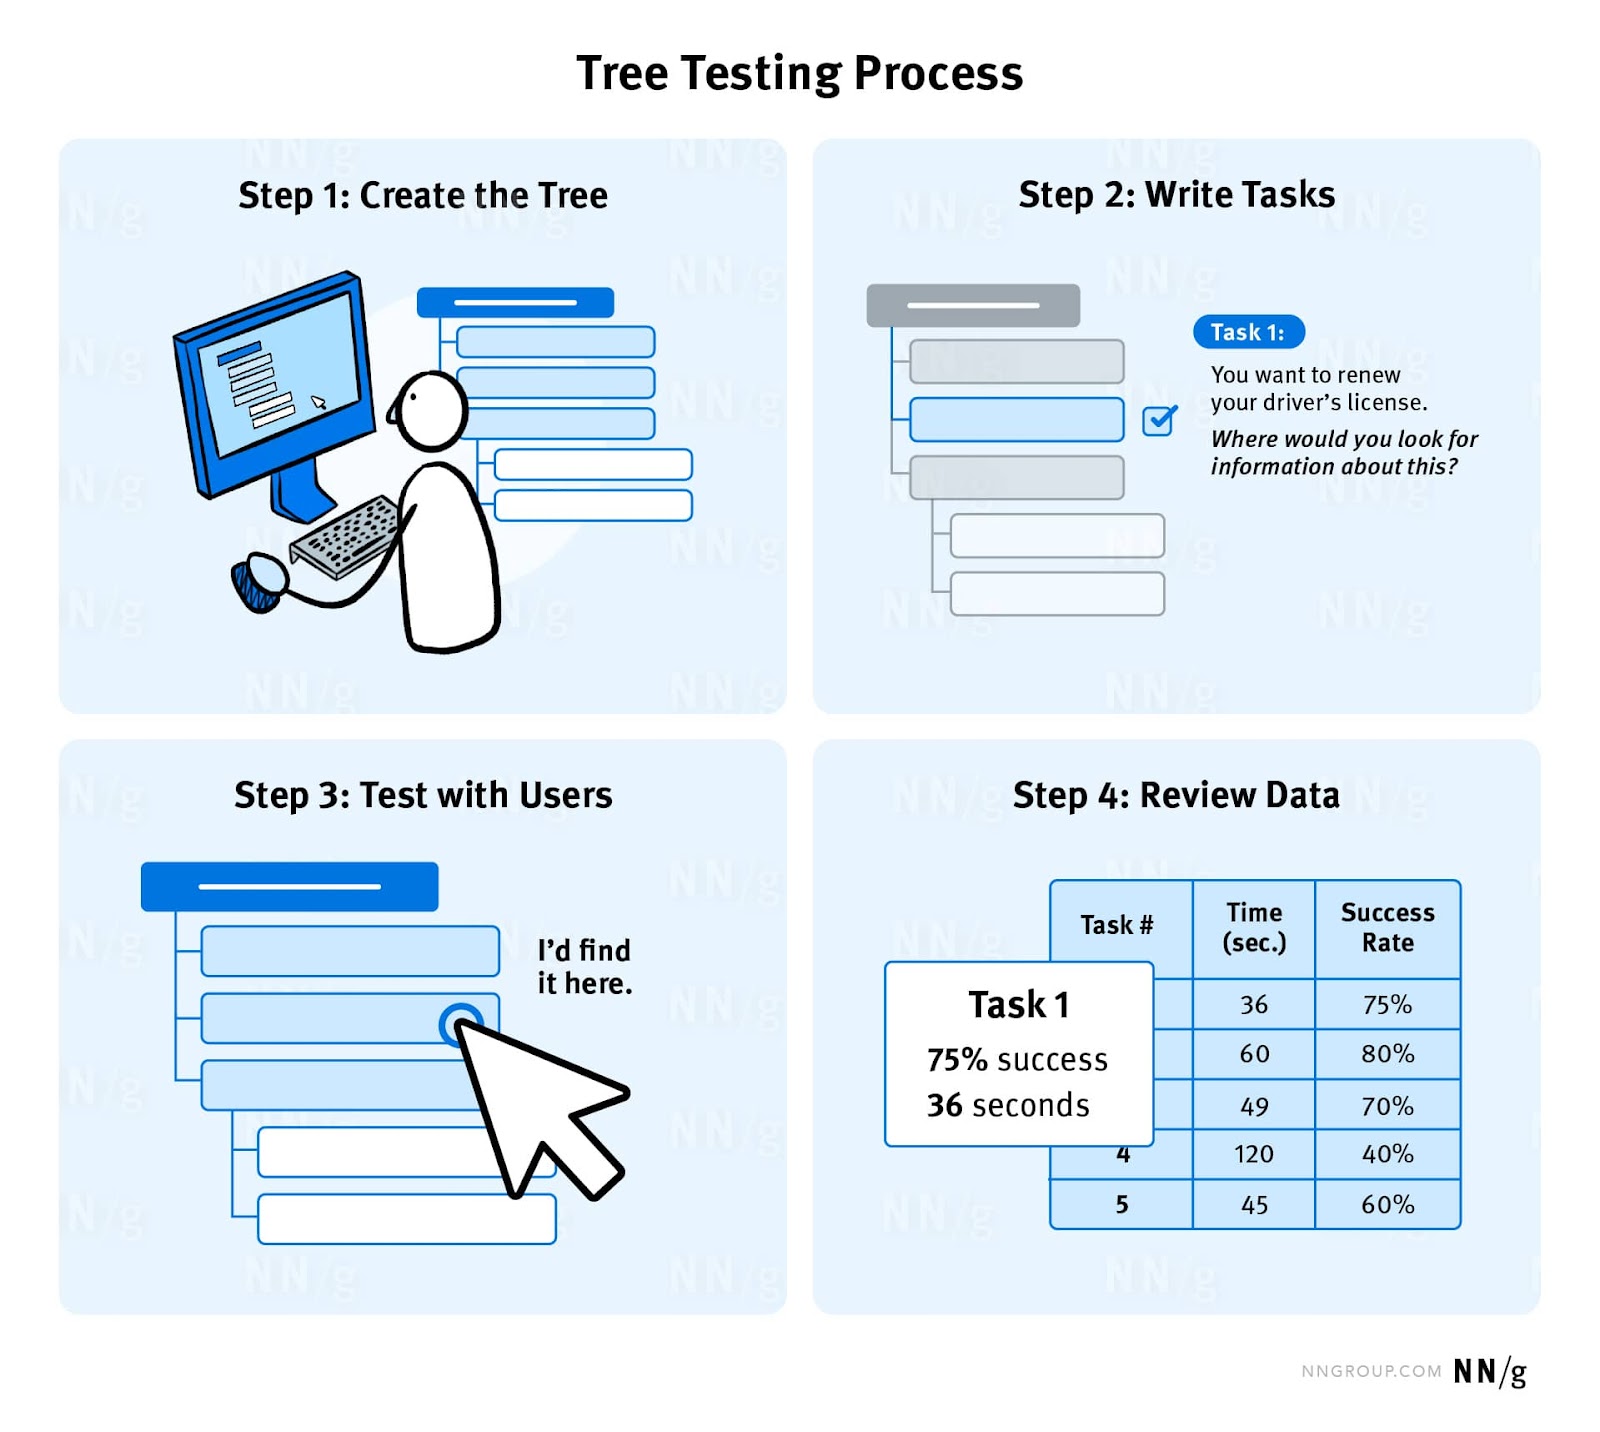 Tree testing process